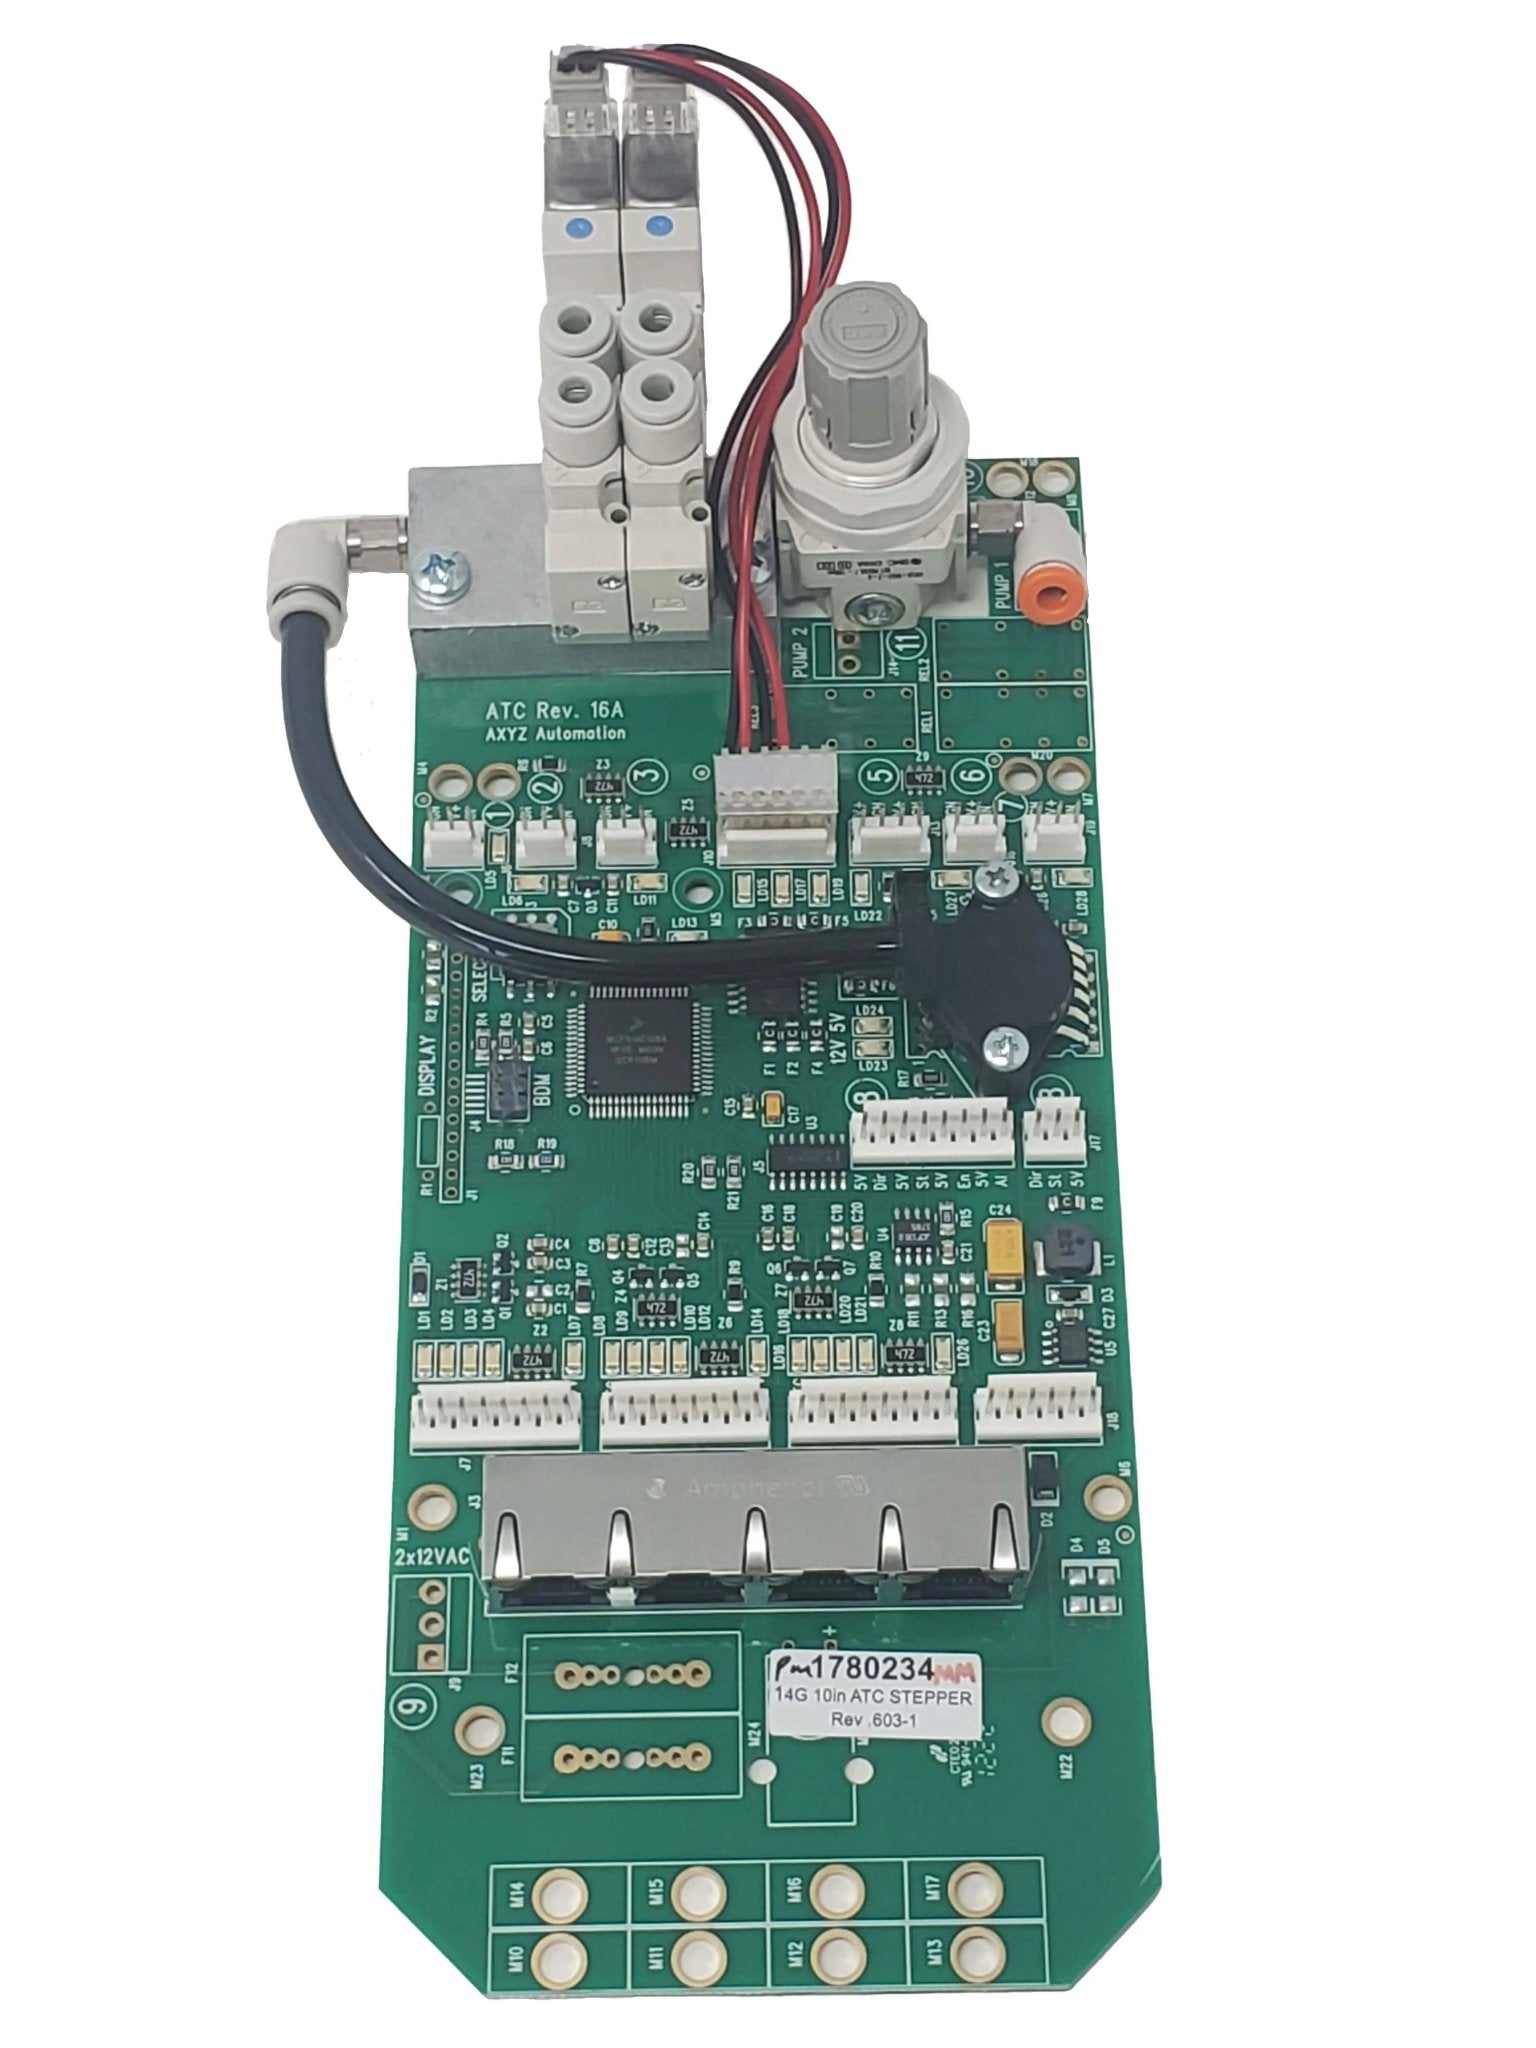 AXYZ - 1780234 7G/10G/14G ATC Modbus Board Stepper Rev. 603.1